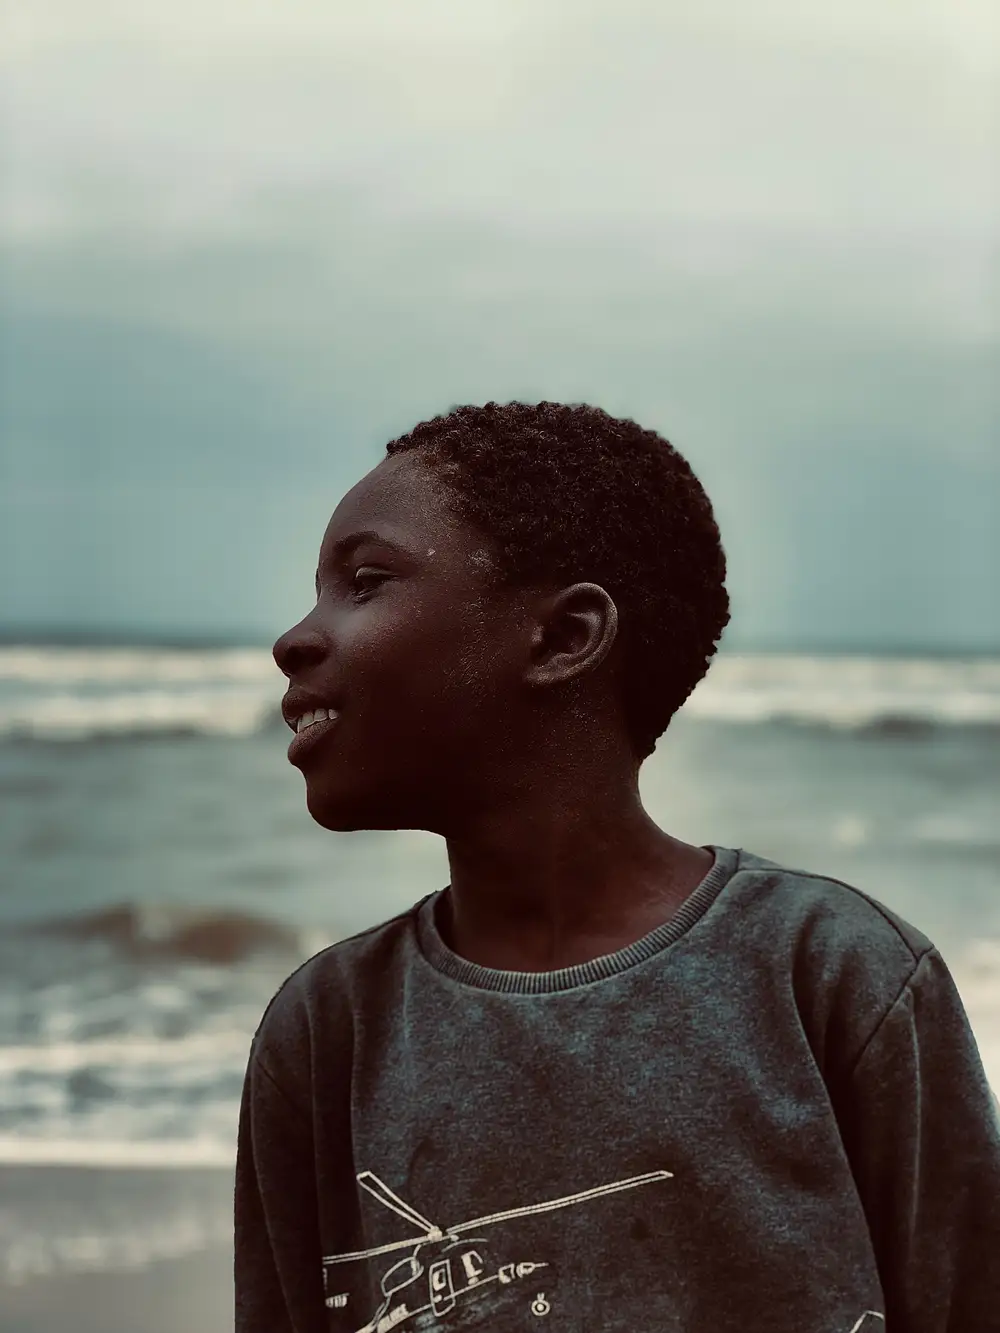 Black child at the sea